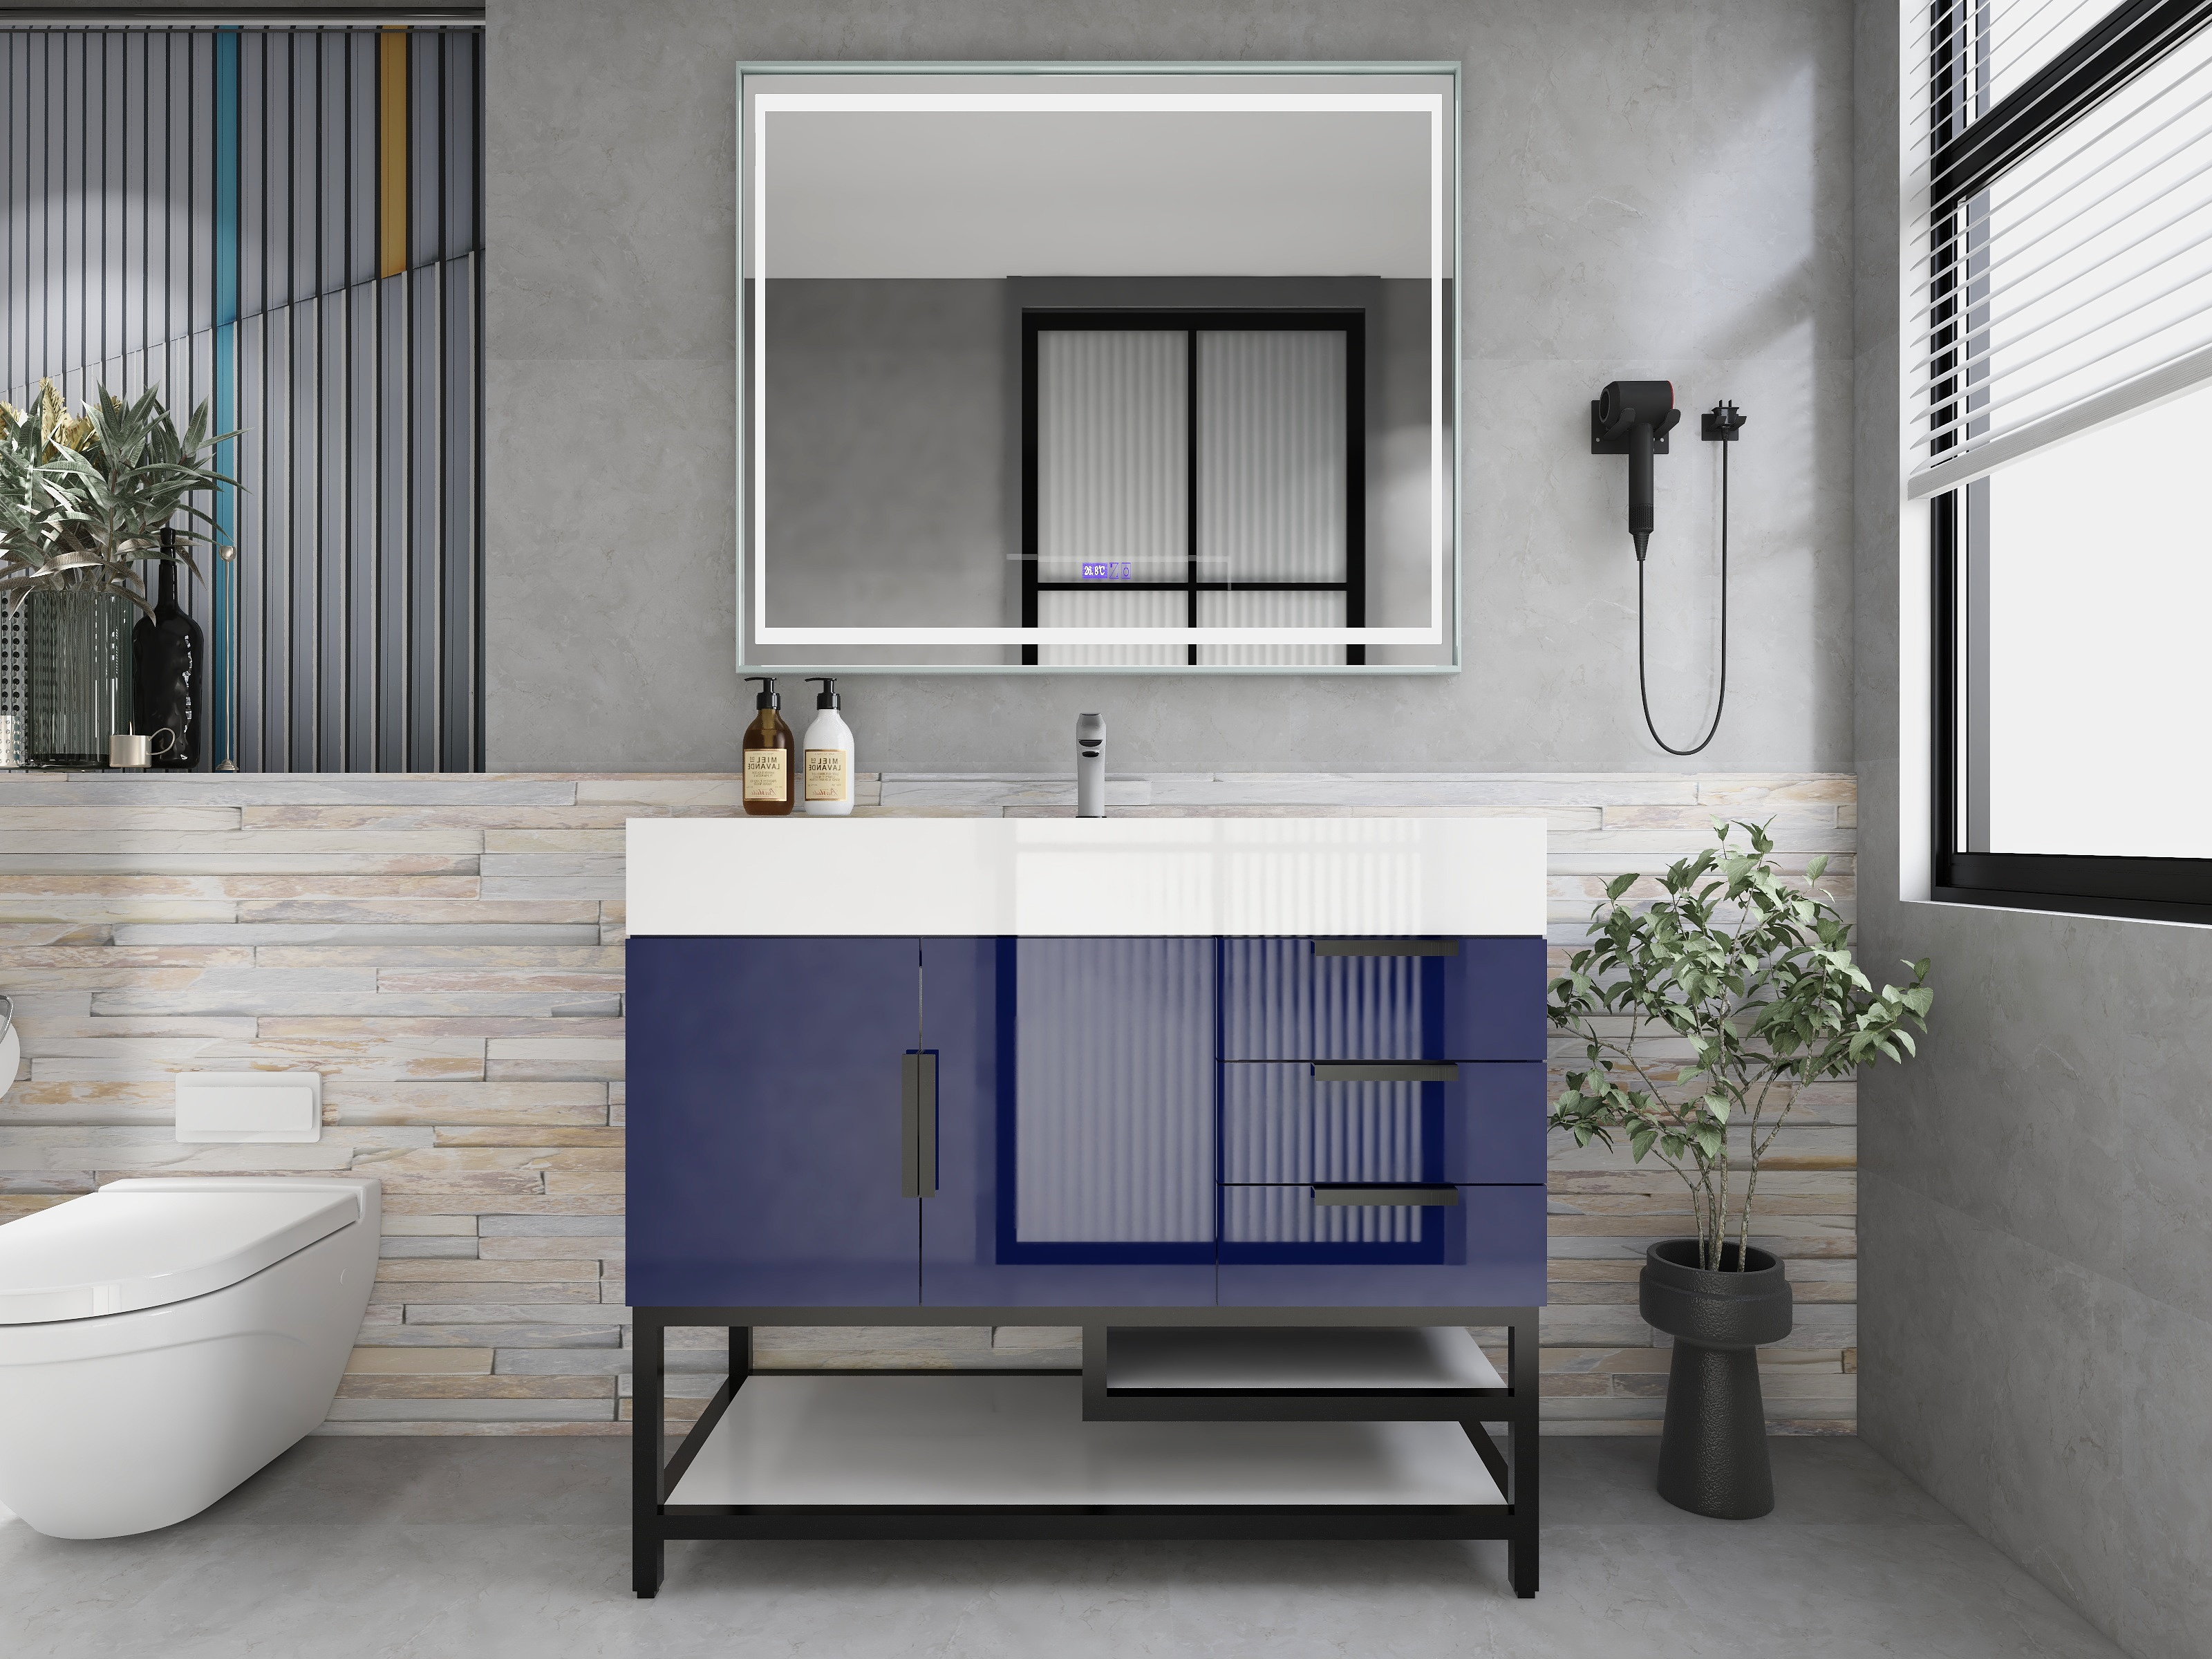 Bethany 42" Freestanding Bathroom Vanity with Reinforced Acrylic Sink in Night Blue Gloss with Black Handles | Better Vanity Bath Vanities